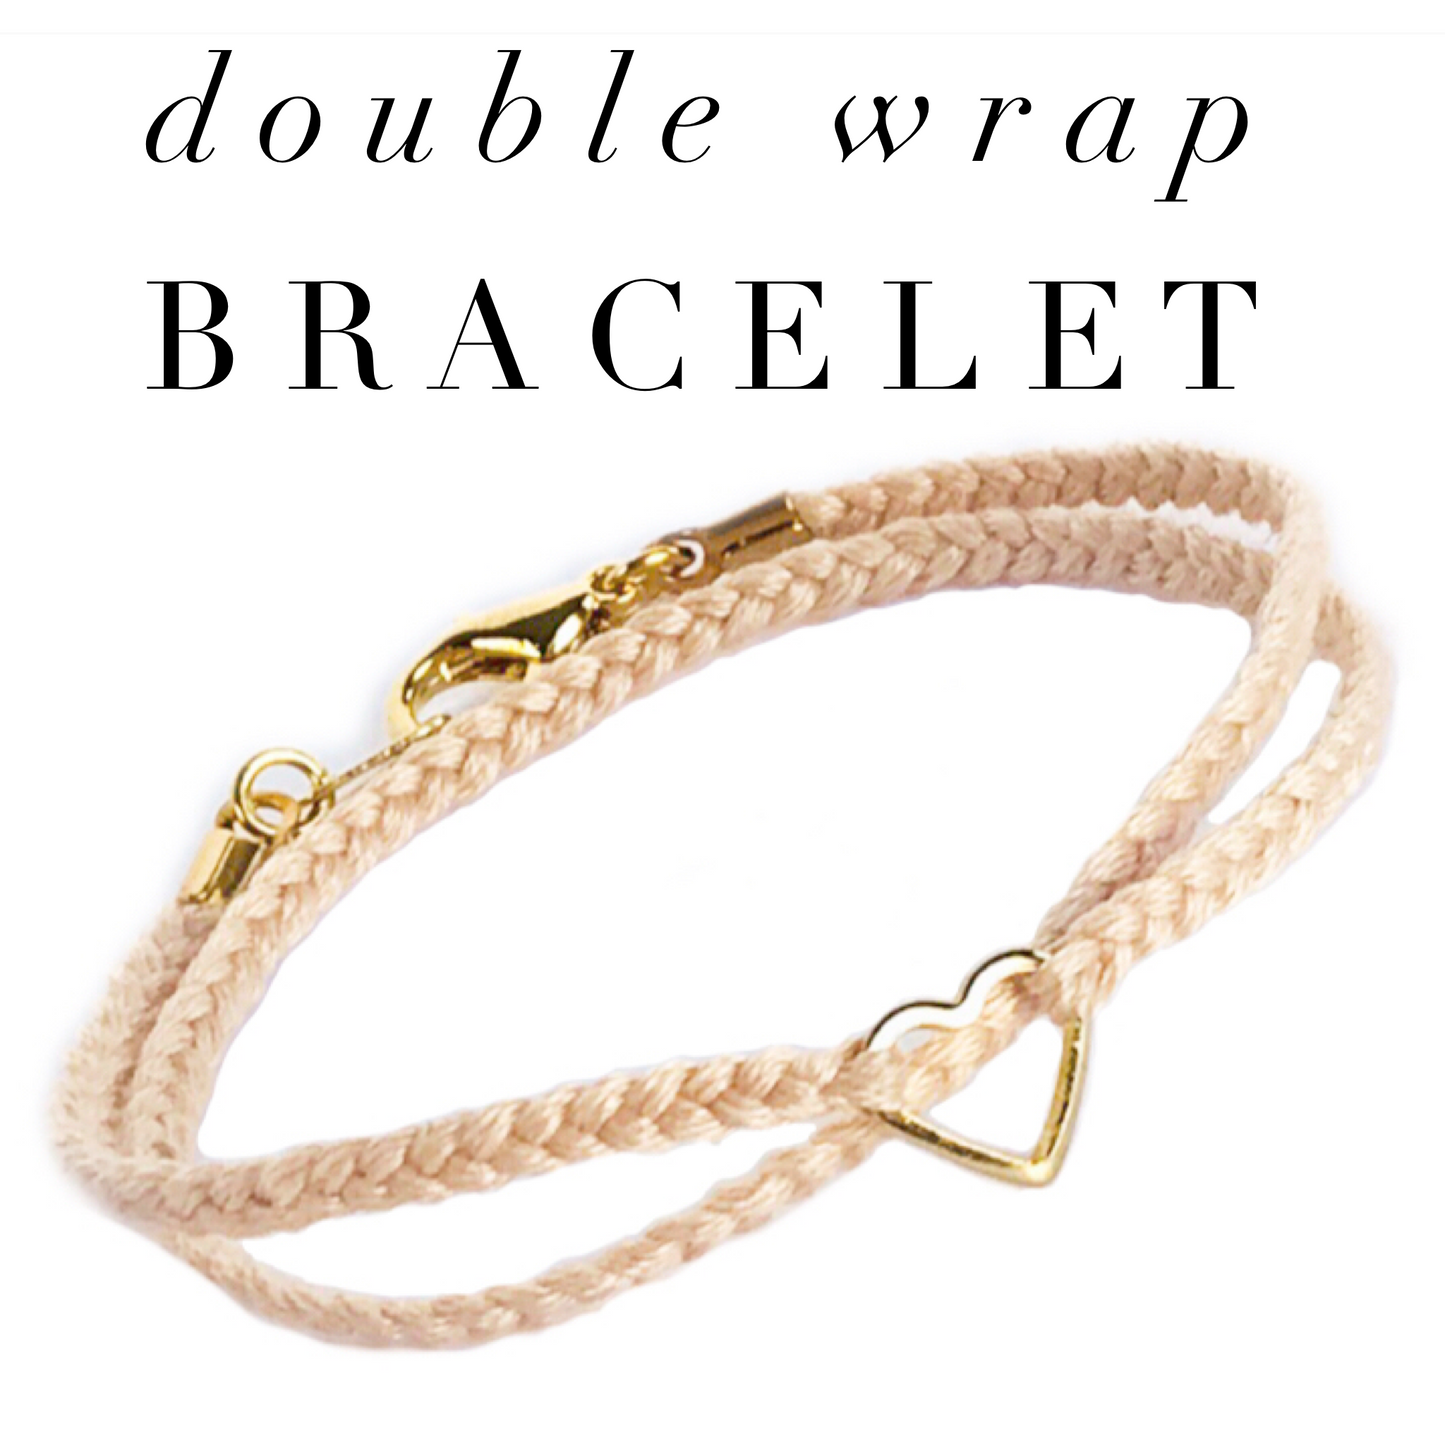 Double Wrap P.S. I Love you bracelet